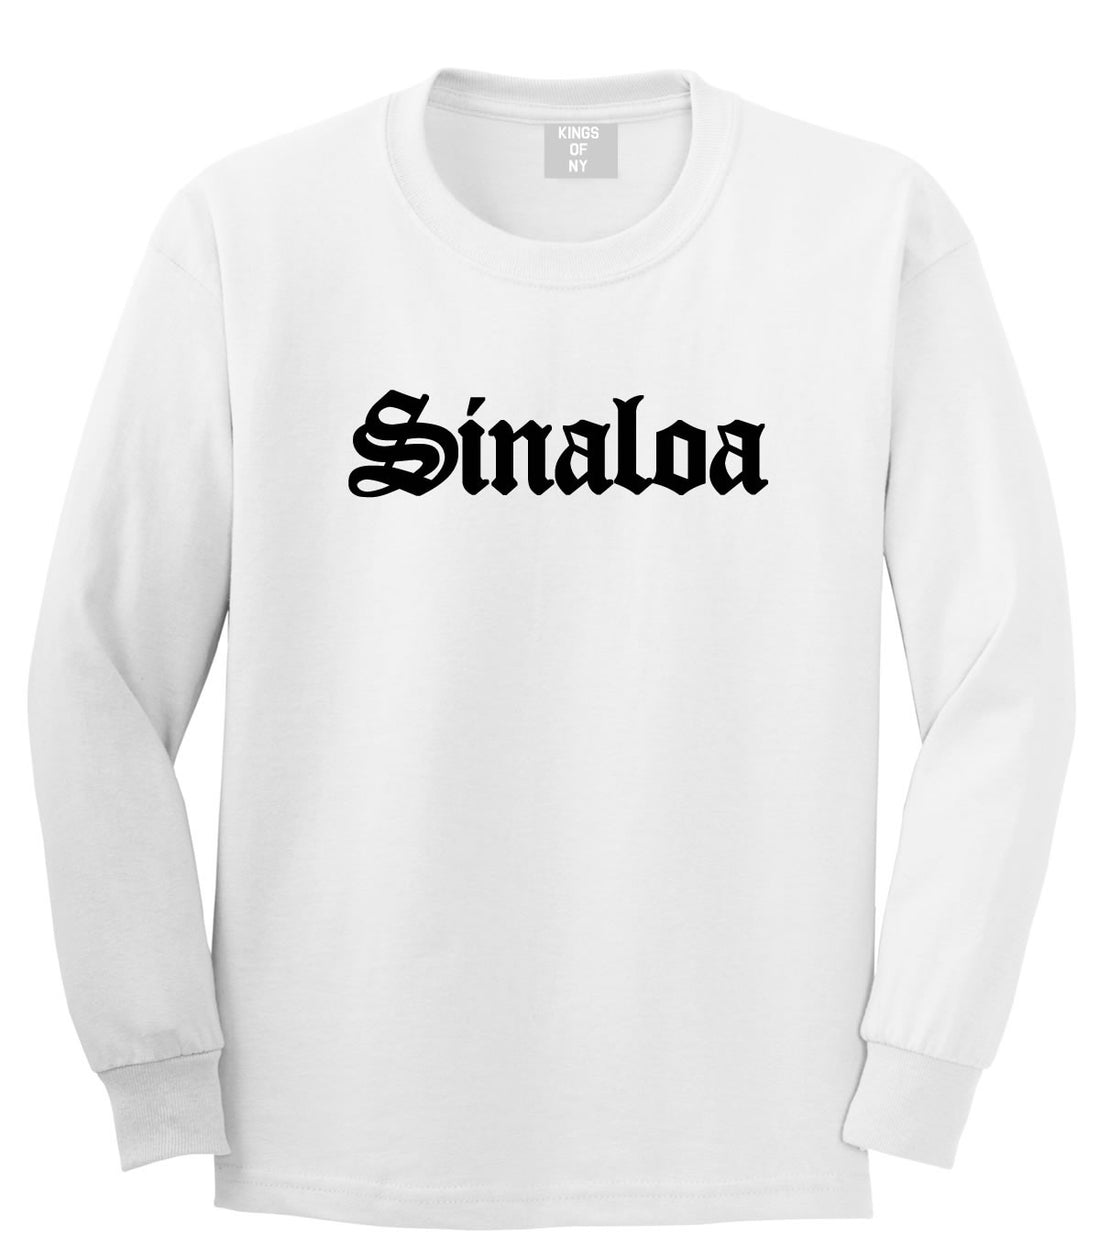 Sinaloa Mexico Cartel Long Sleeve T-Shirt